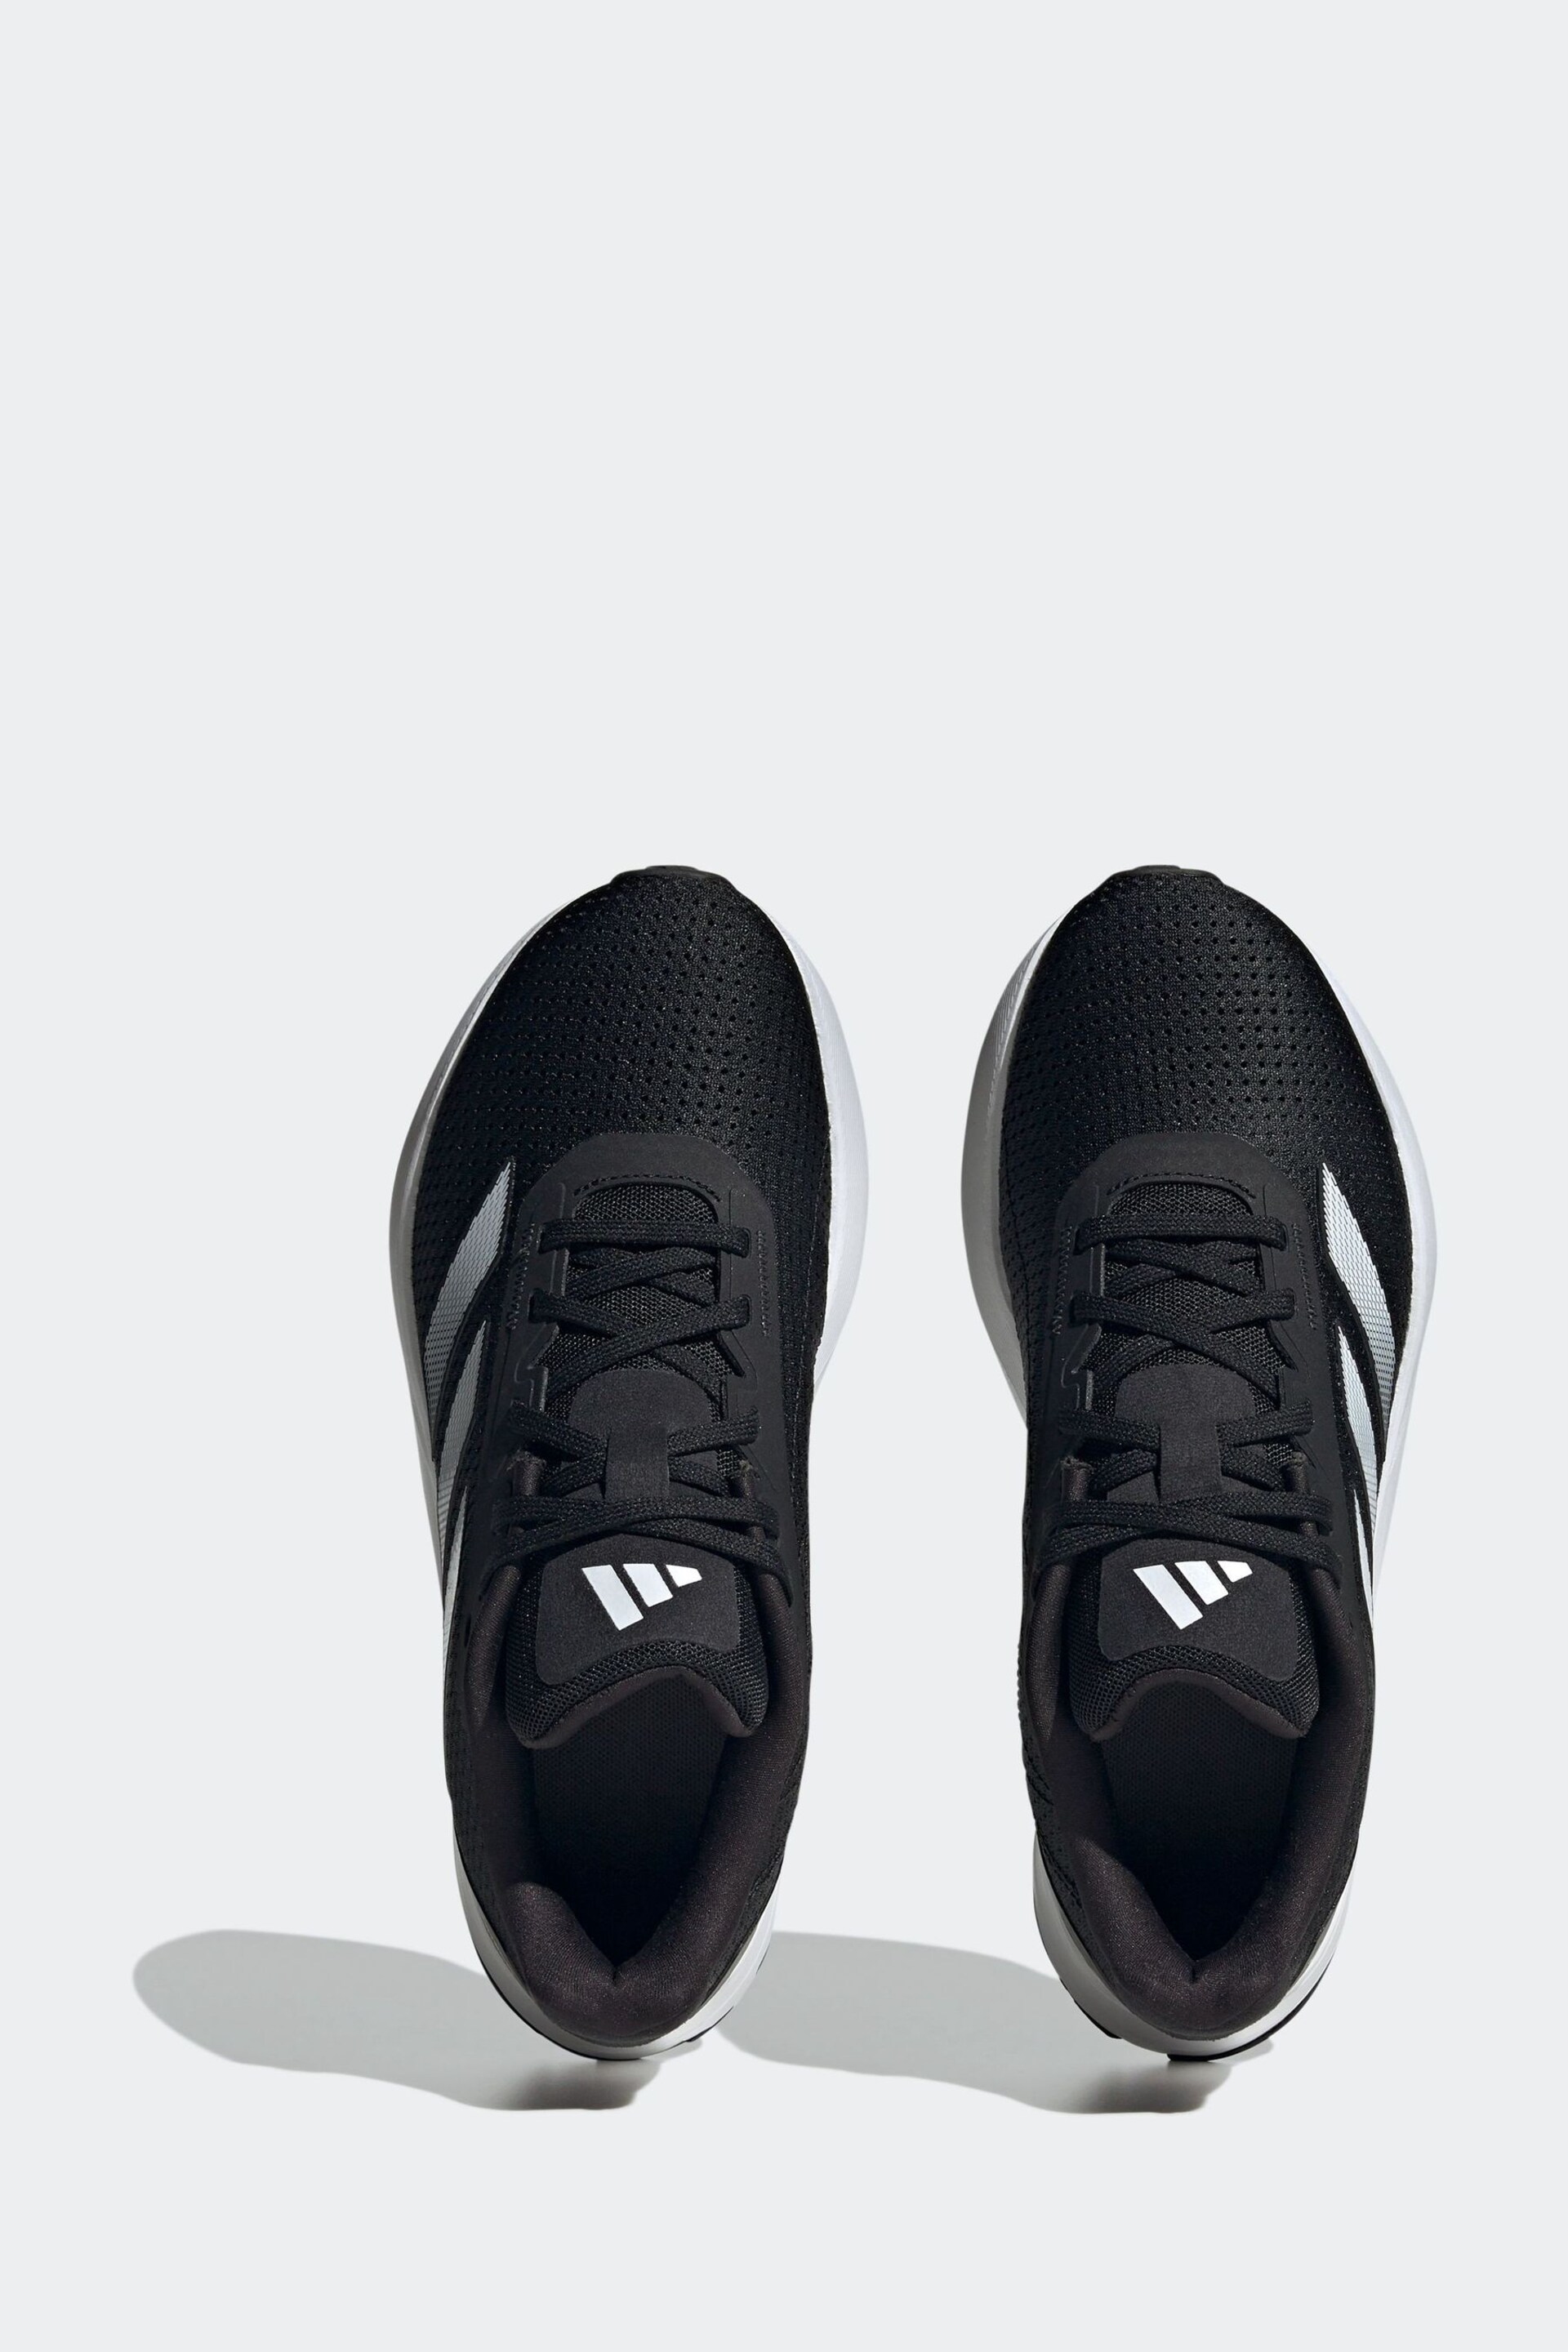 adidas Black/White Duramo Running Shoes - Image 7 of 10